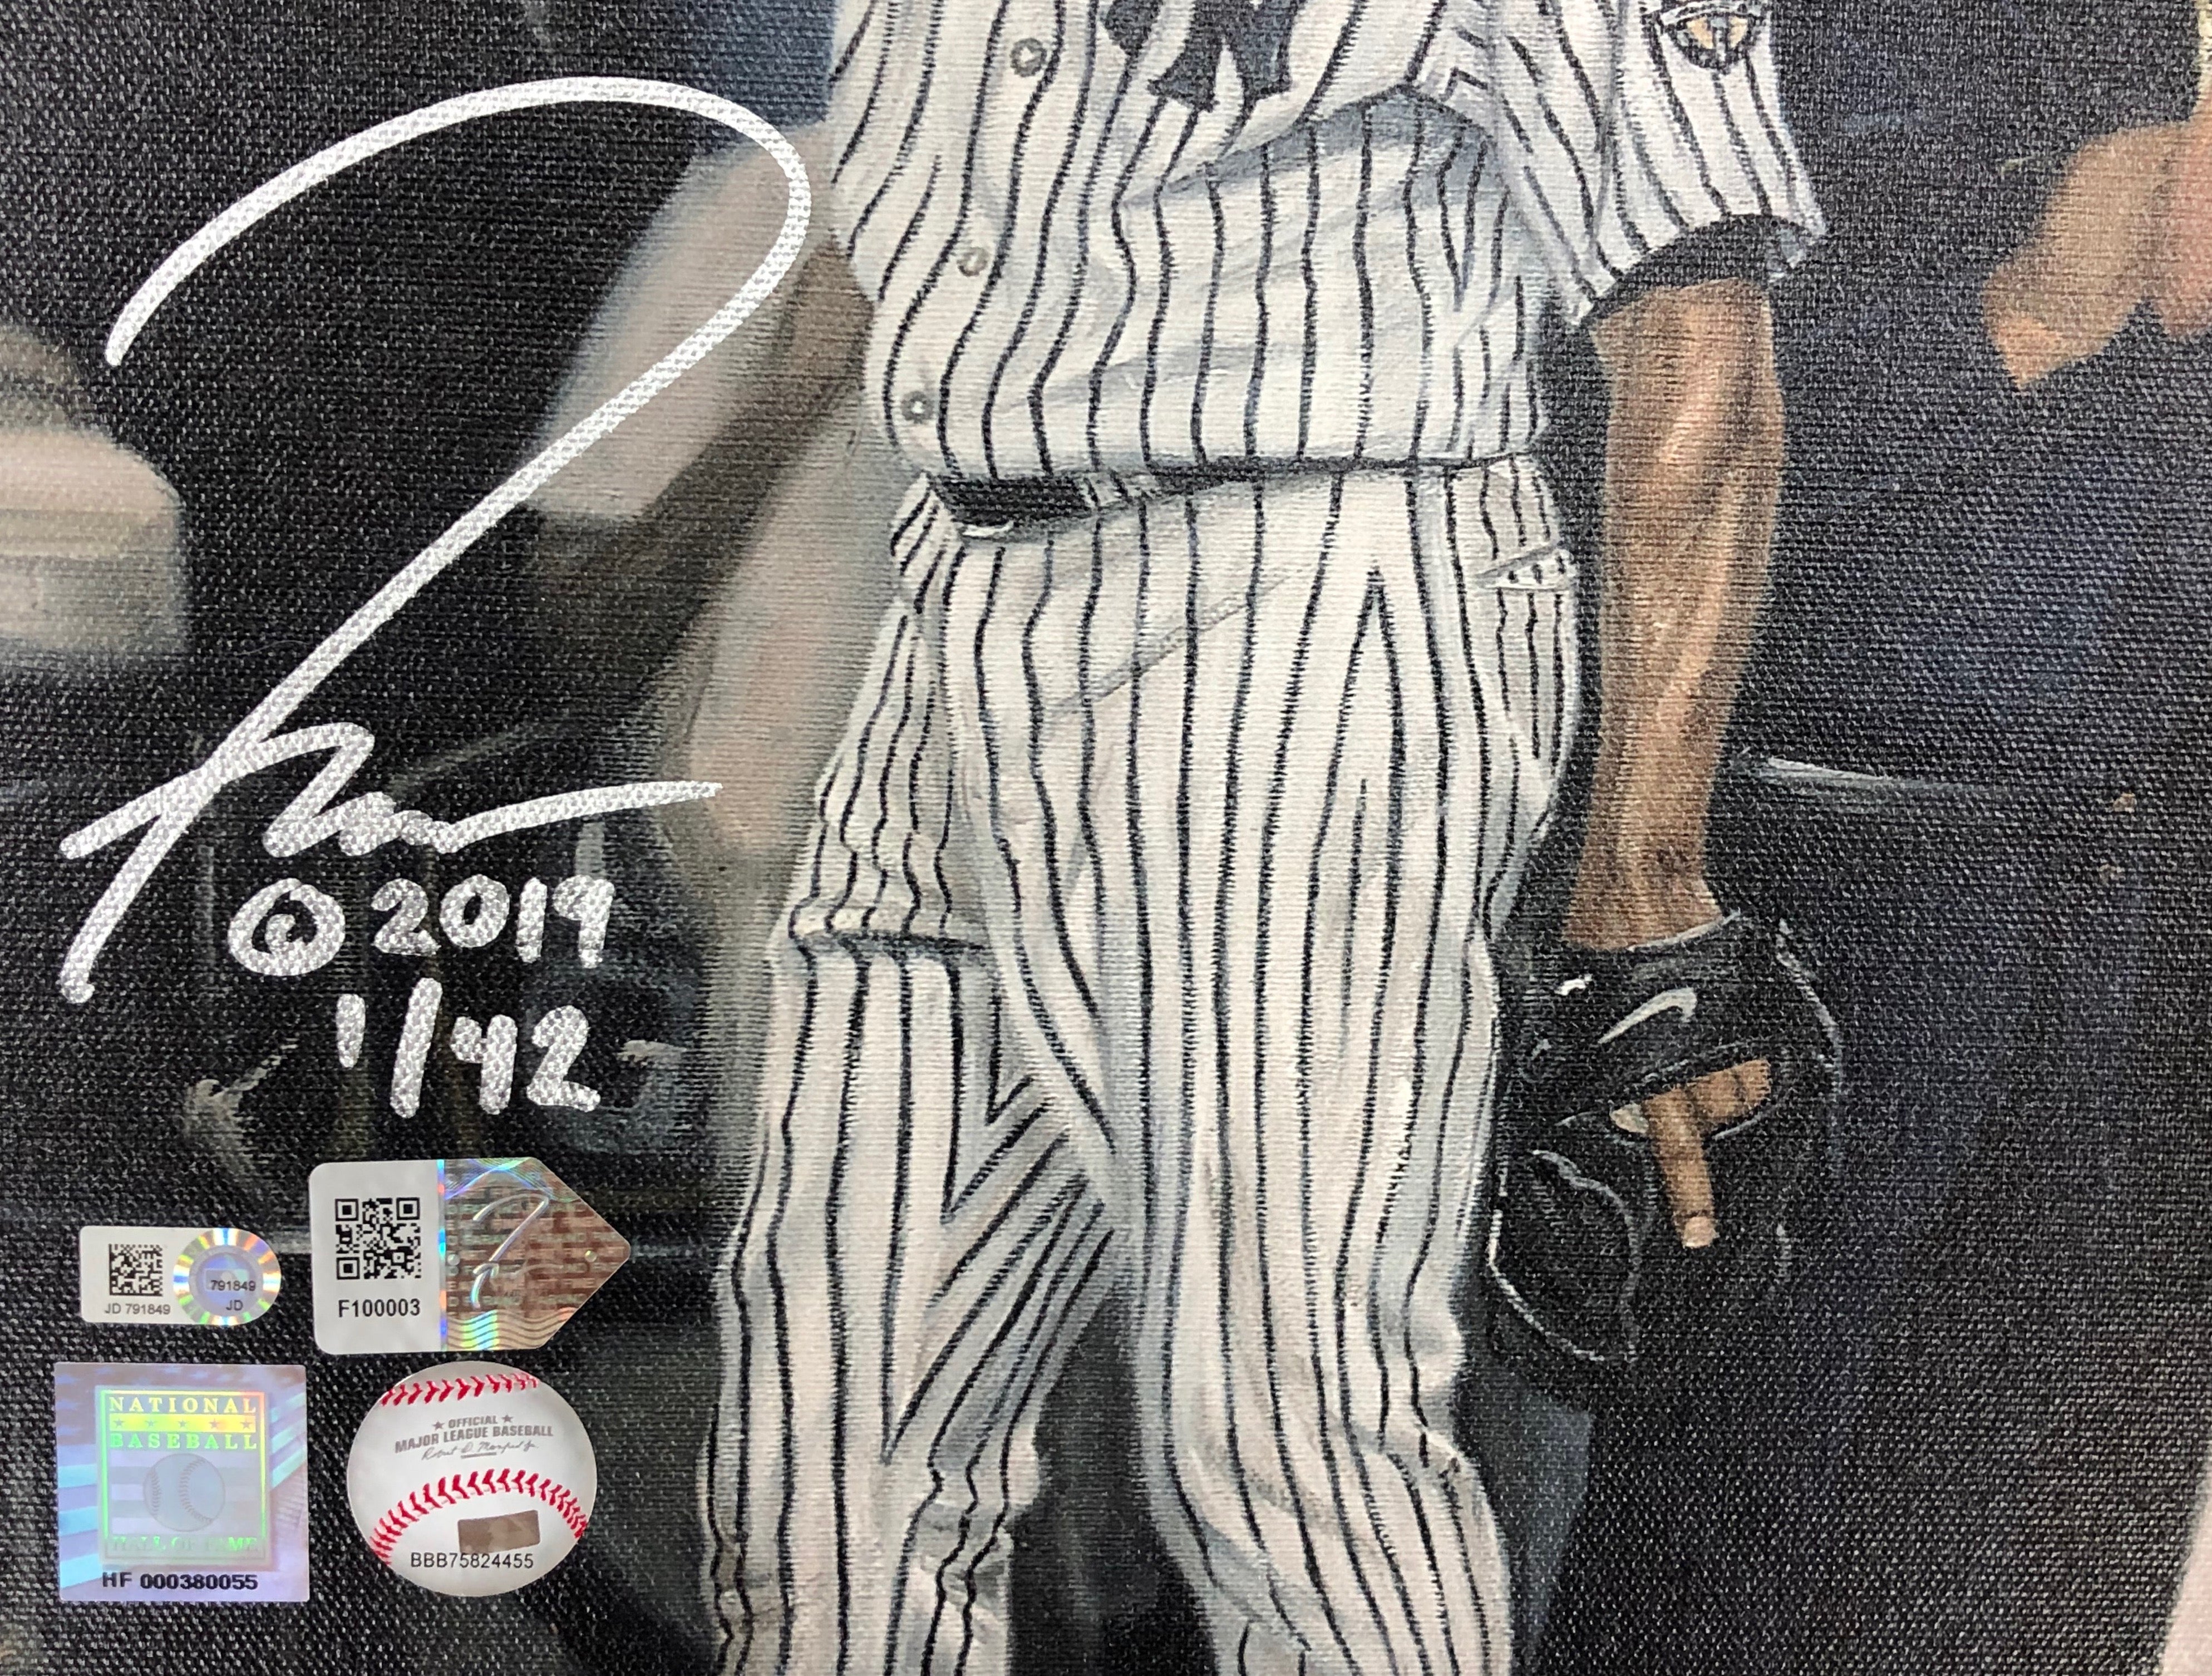 2019 Signed NY Yankees Mariano Rivera HOF Jersey limited edition # 17 of 42